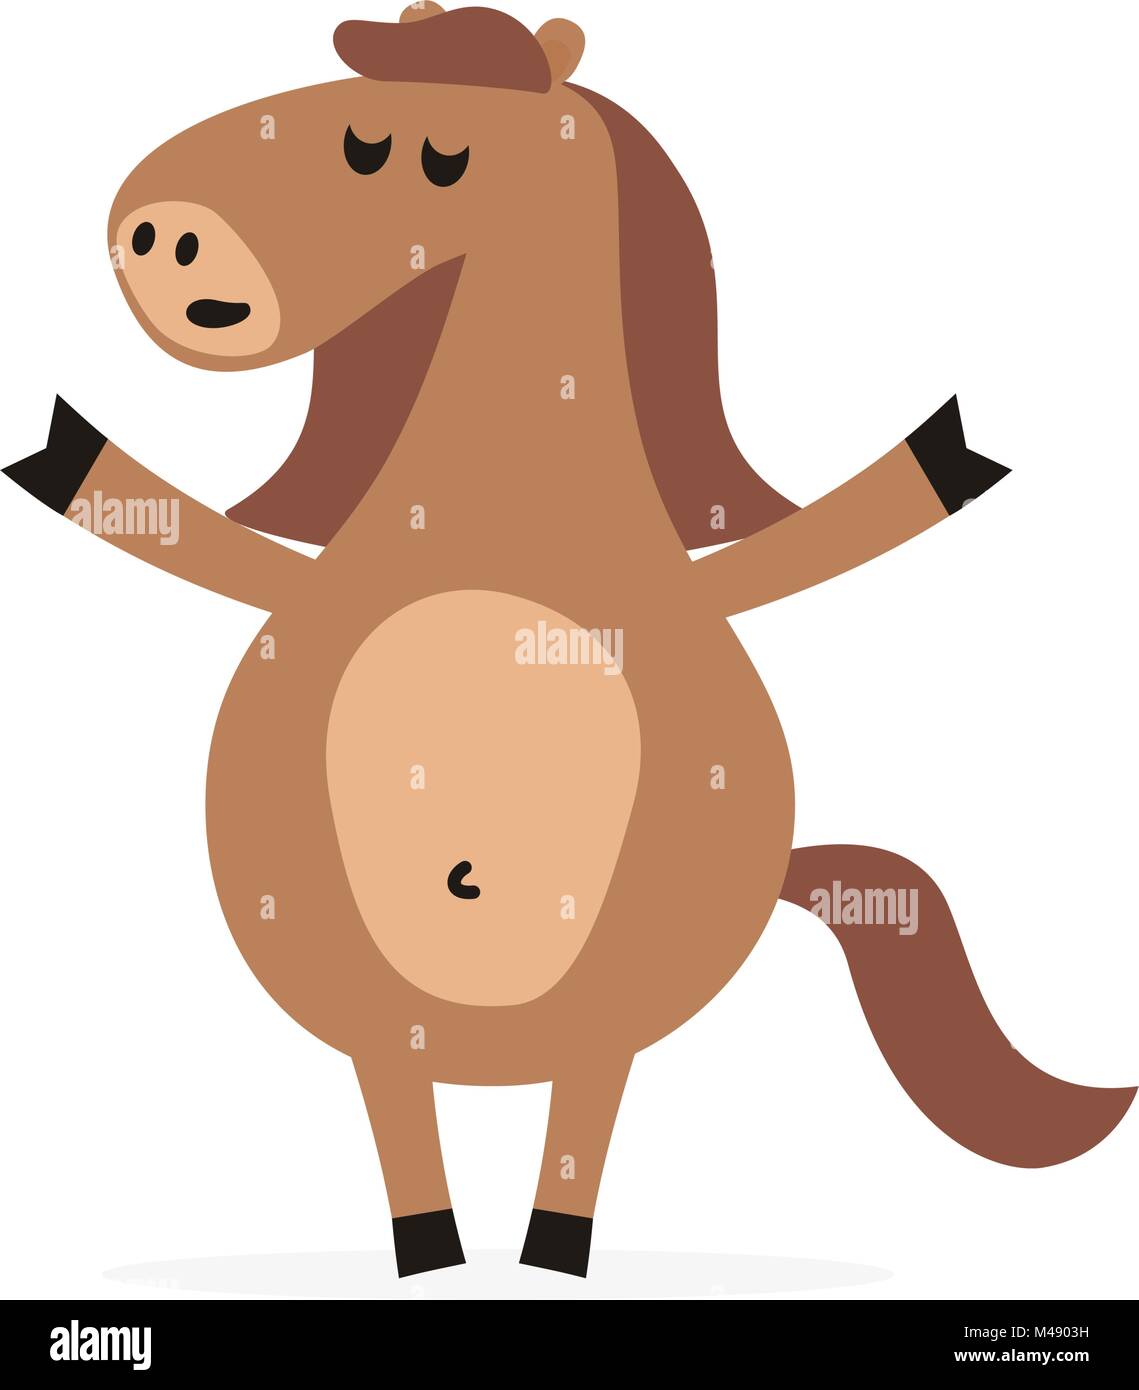 Smiling cartoon horse mascot character. Vector illustration Stock Vector  Image & Art - Alamy